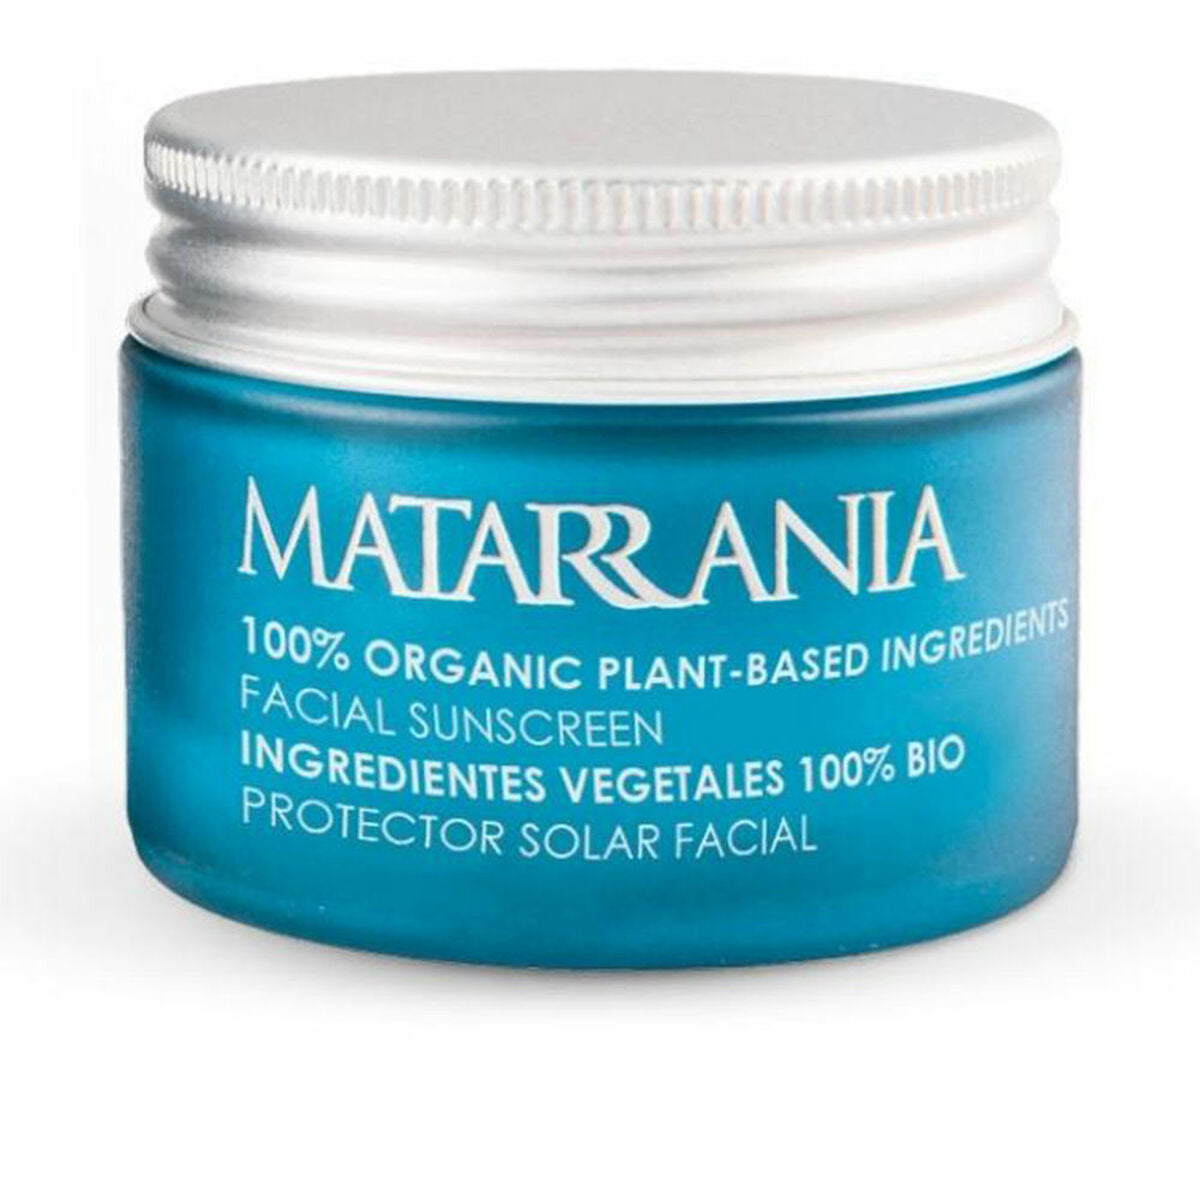 Facial Sun Cream Matarrania 100% Bio Spf 50 30 ml | Matarrania | Aylal Beauty